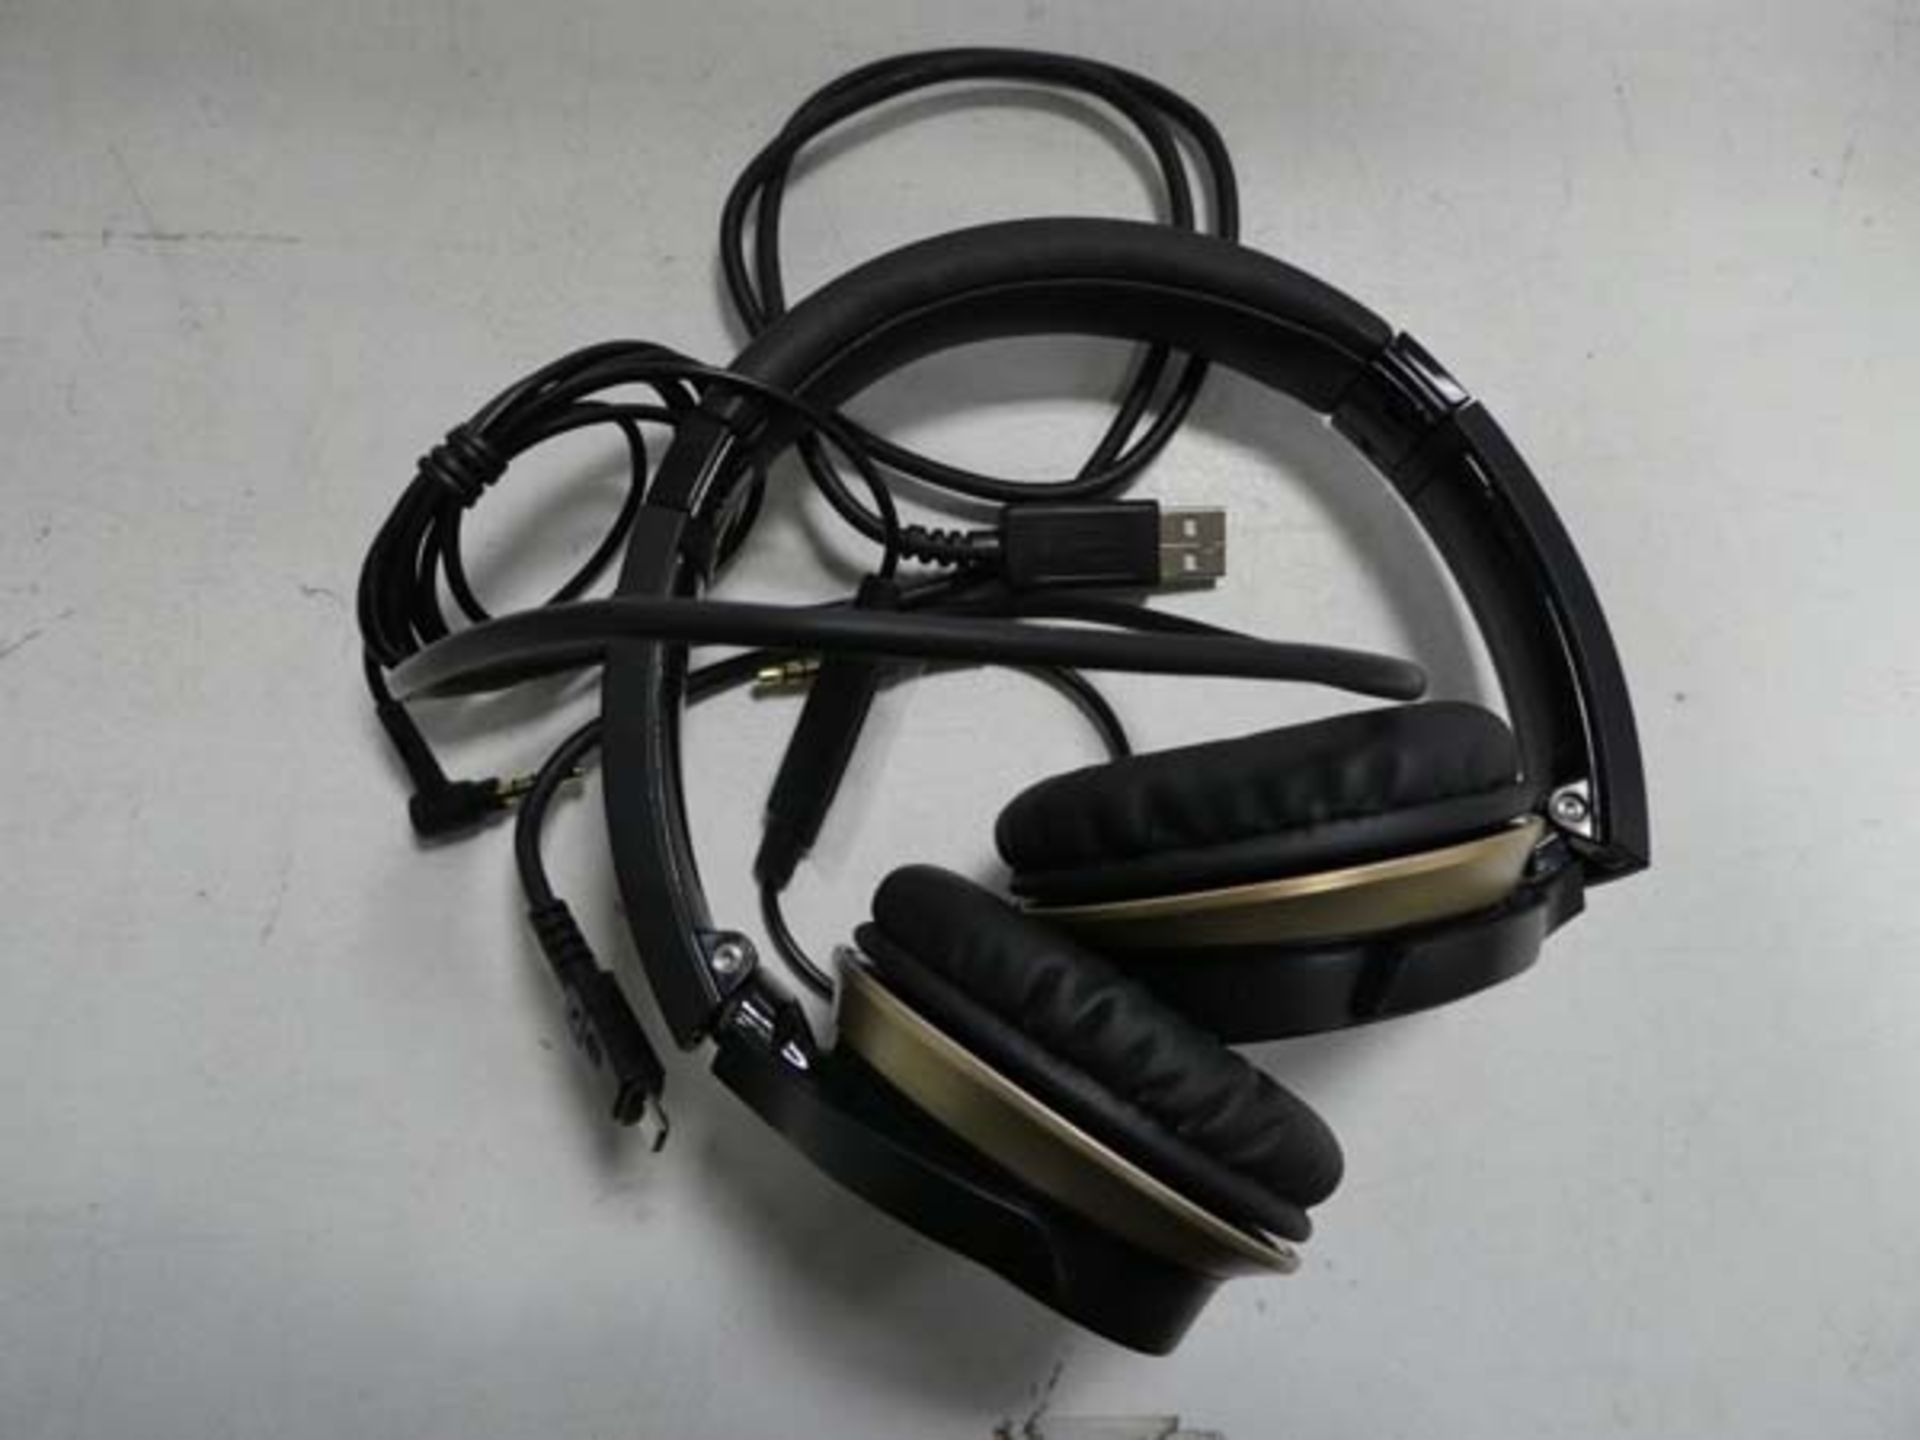 Pair of Audio Technica bluetooth headphones with box